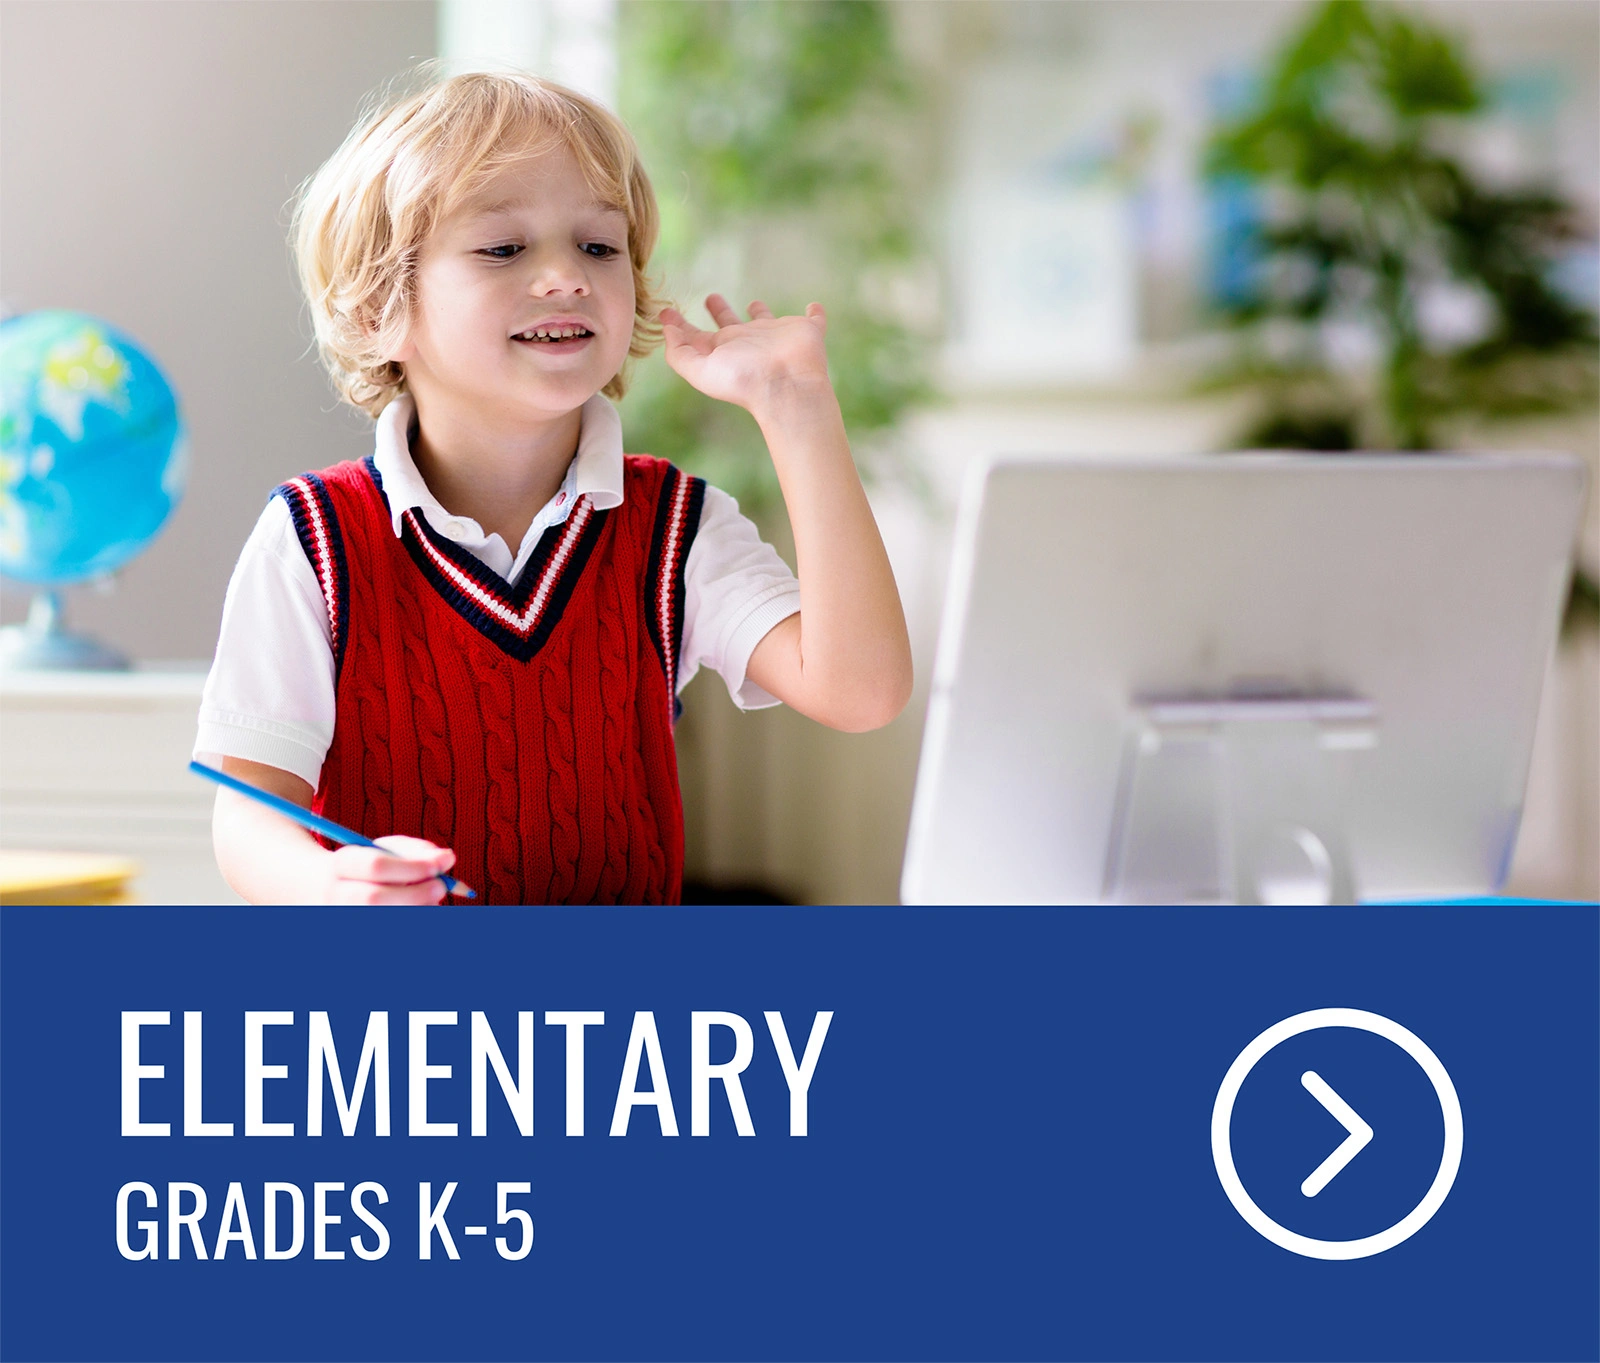 Elementary, Grades K-5